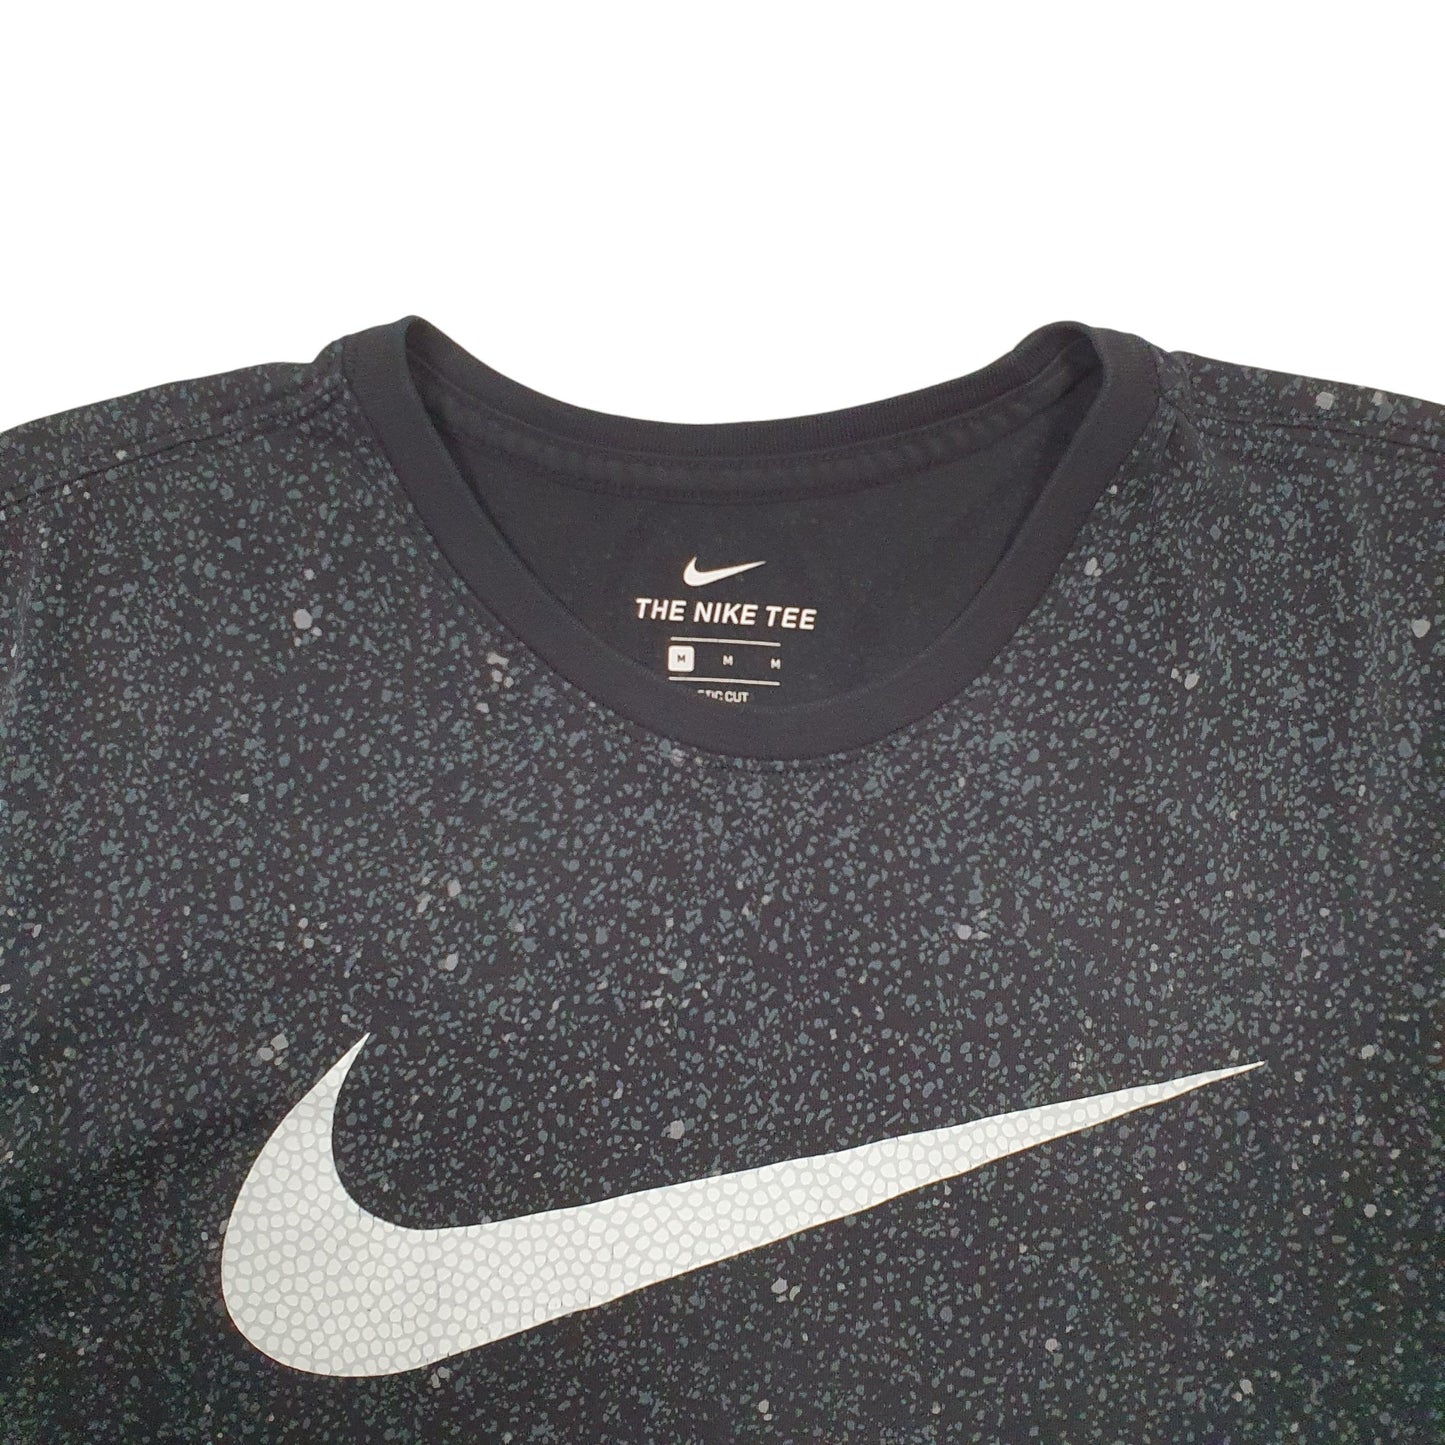 Mens Black Nike Dri-Fit Short Sleeve T Shirt